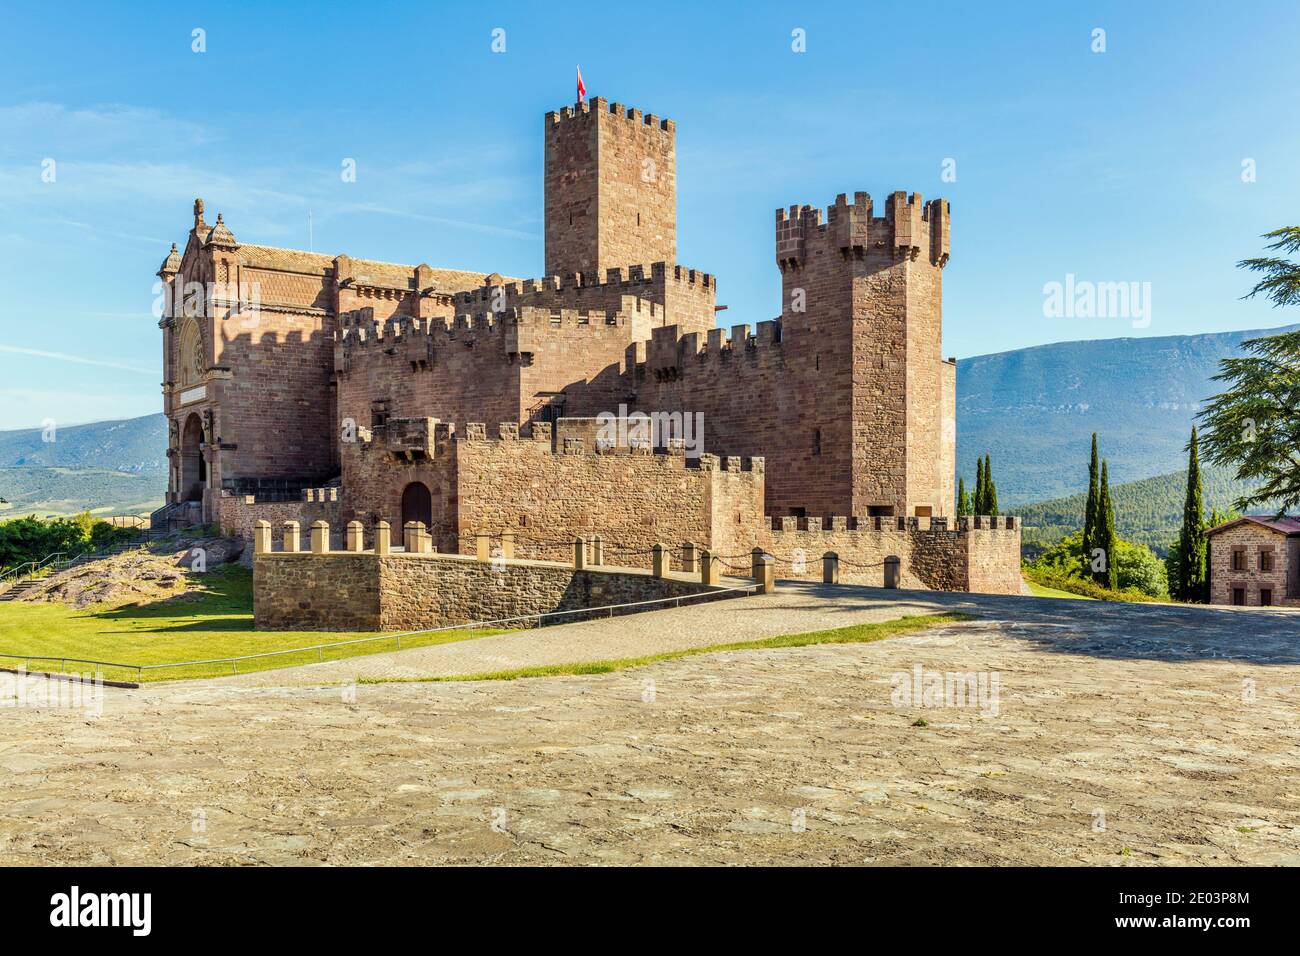 Castillo de Javier, or Castle of Xavier, Javier, Navarra, Spain.  Birthplace in 1506 of Spanish Catholic priest and missionary Saint Francis Xavier. Stock Photo